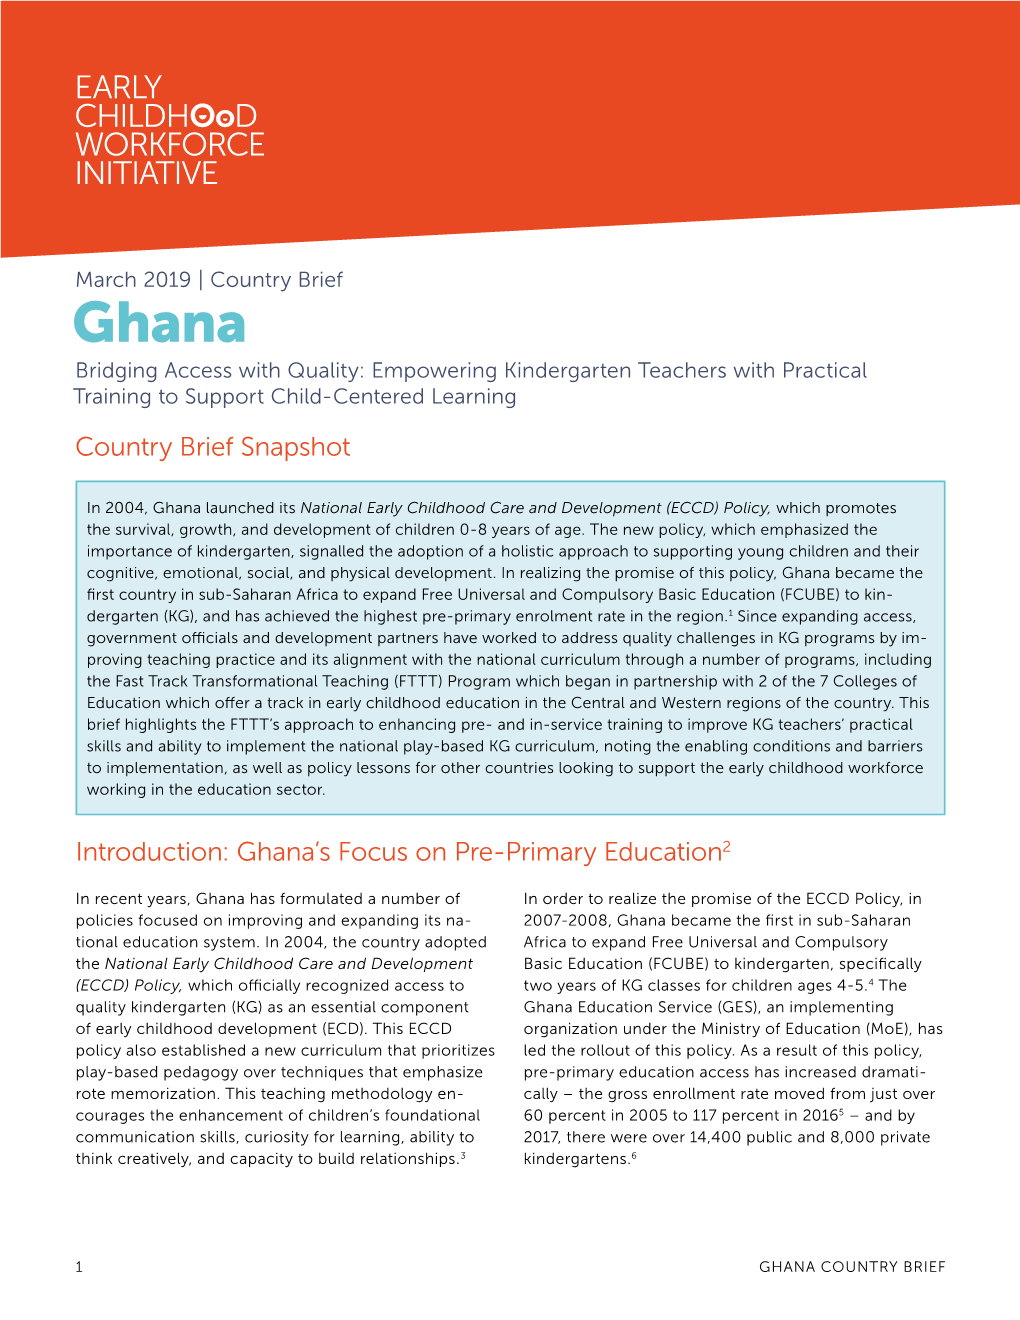 Ghana's Focus on Pre-Primary Education2